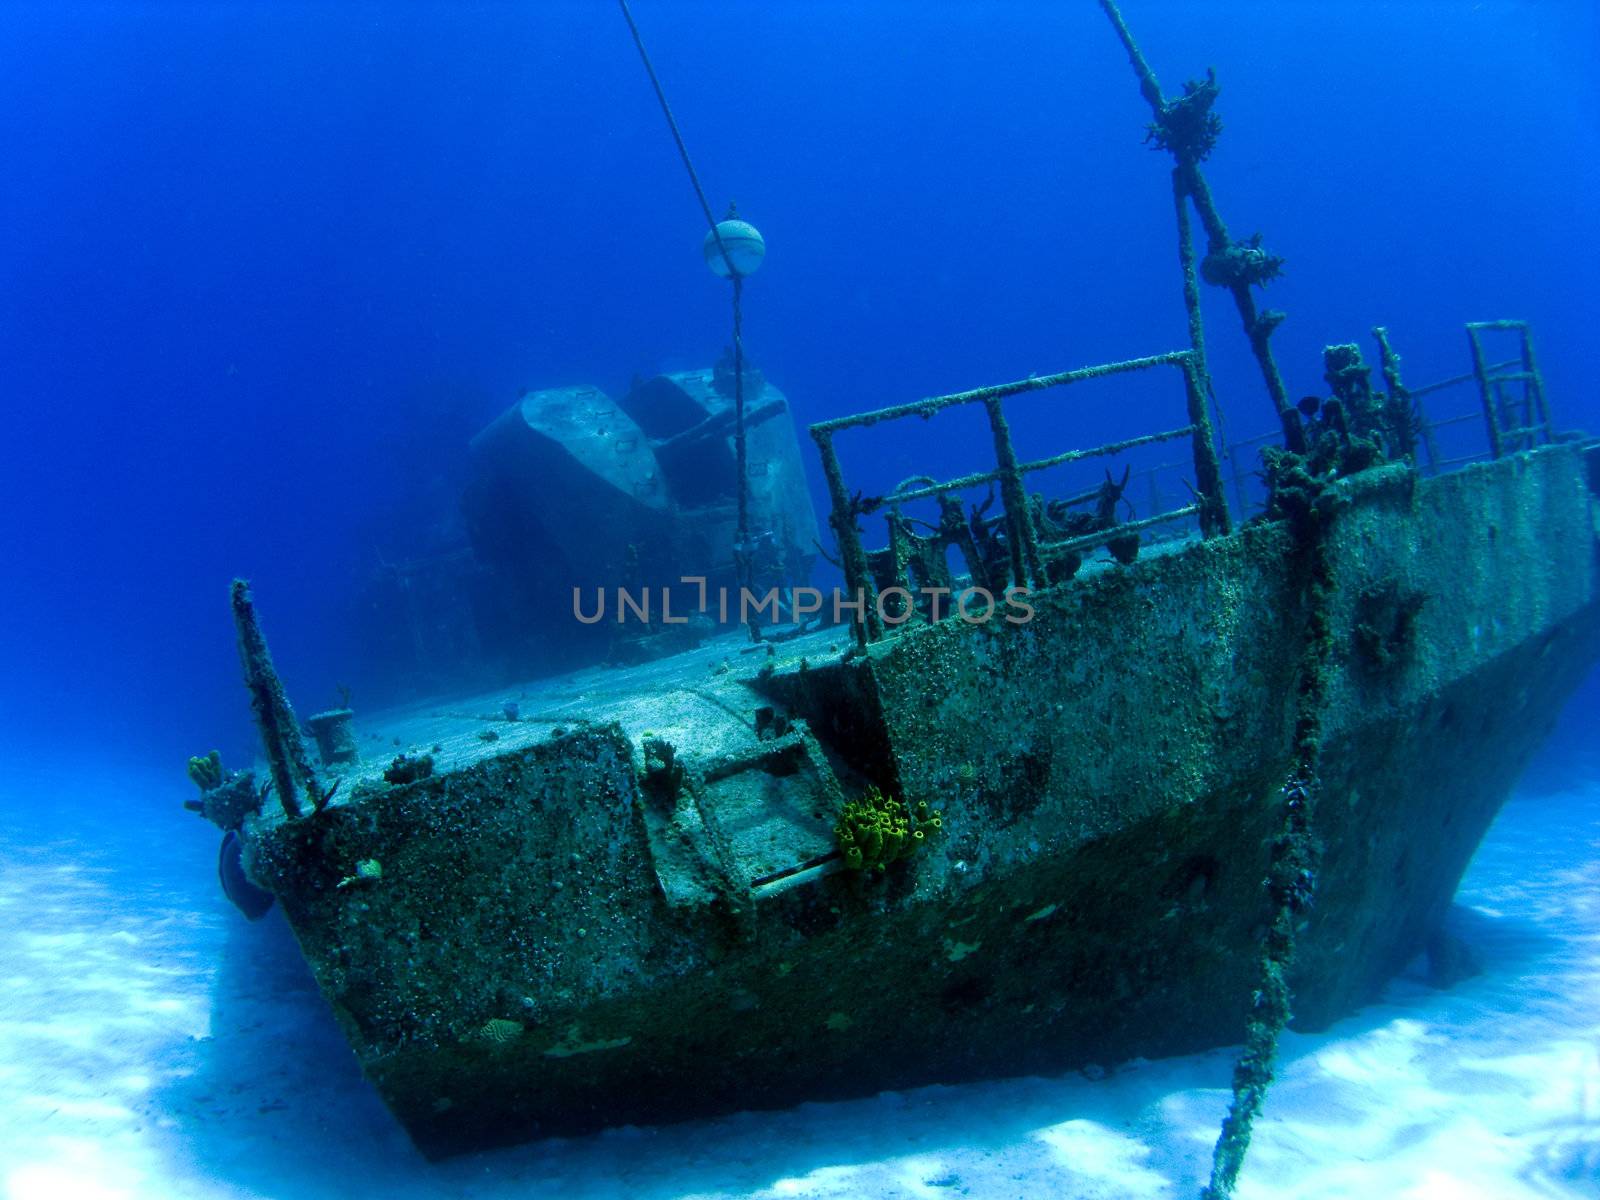 Underwater Shipwreck in Cayman Brac by KevinPanizza